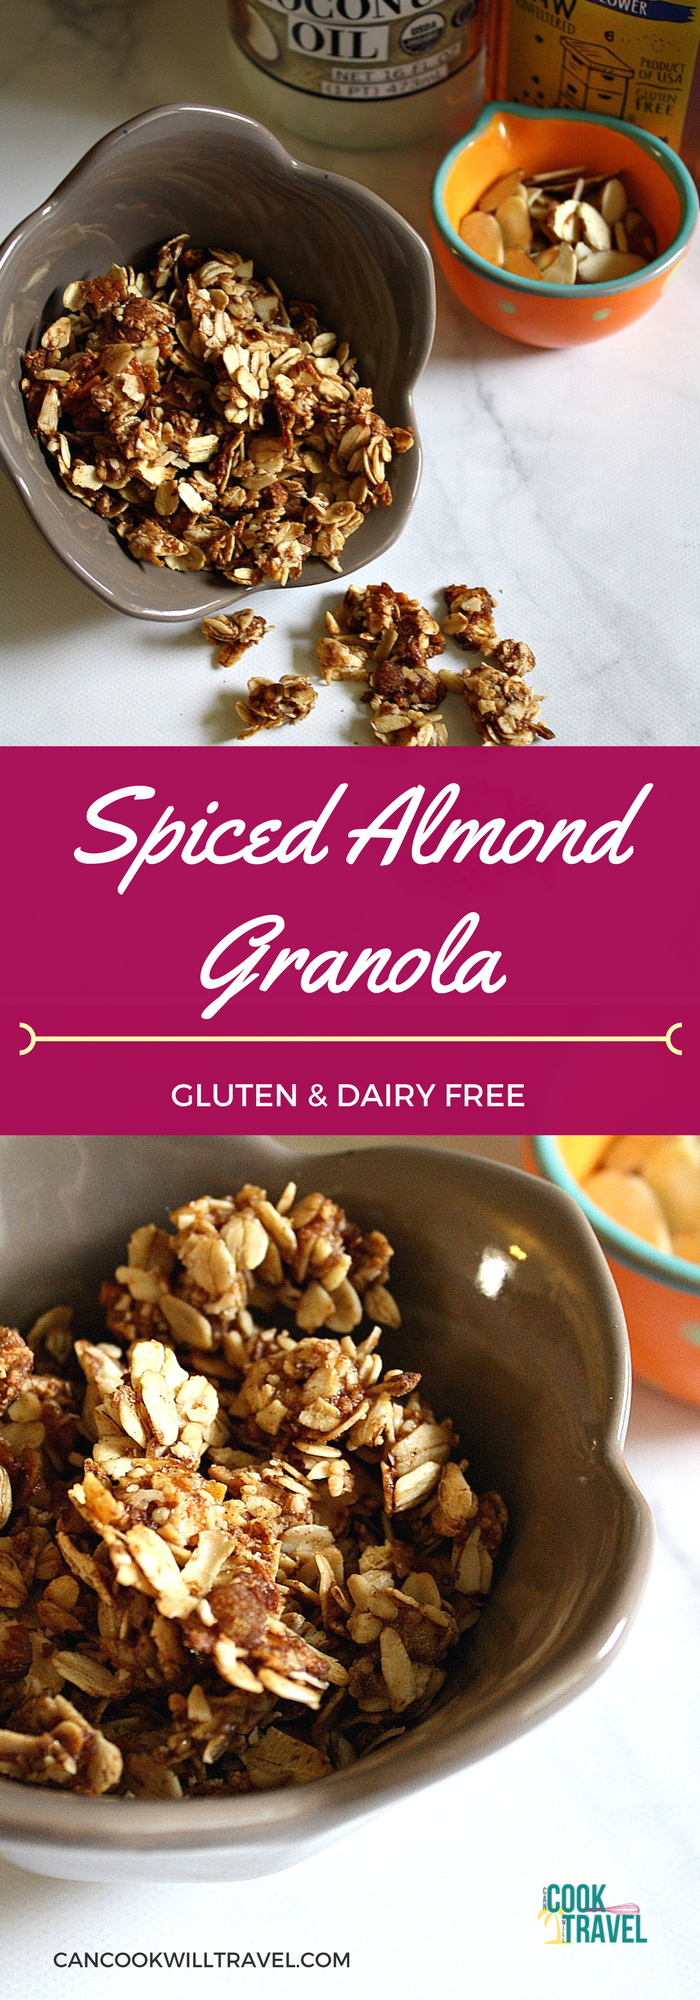 Spiced Almond Granola